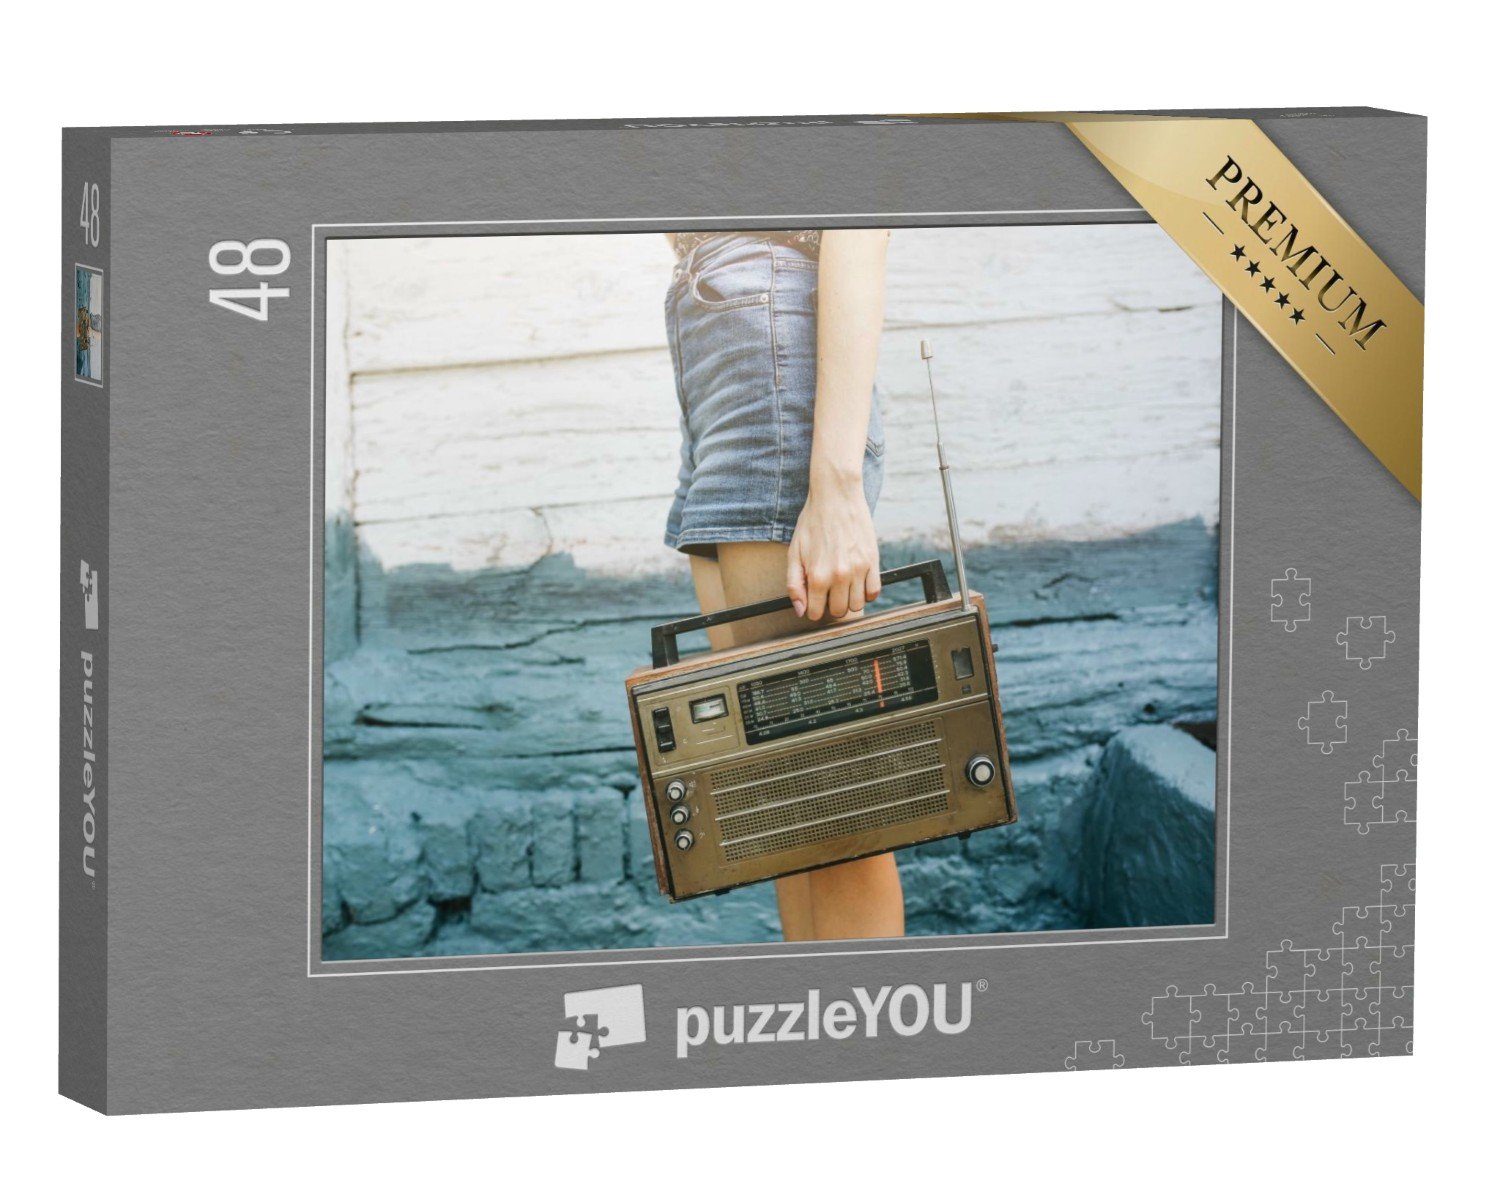 puzzleYOU Puzzle Retro-Lifestyle mit tragbarem Radio, 48 Puzzleteile, puzzleYOU-Kollektionen Nostalgie